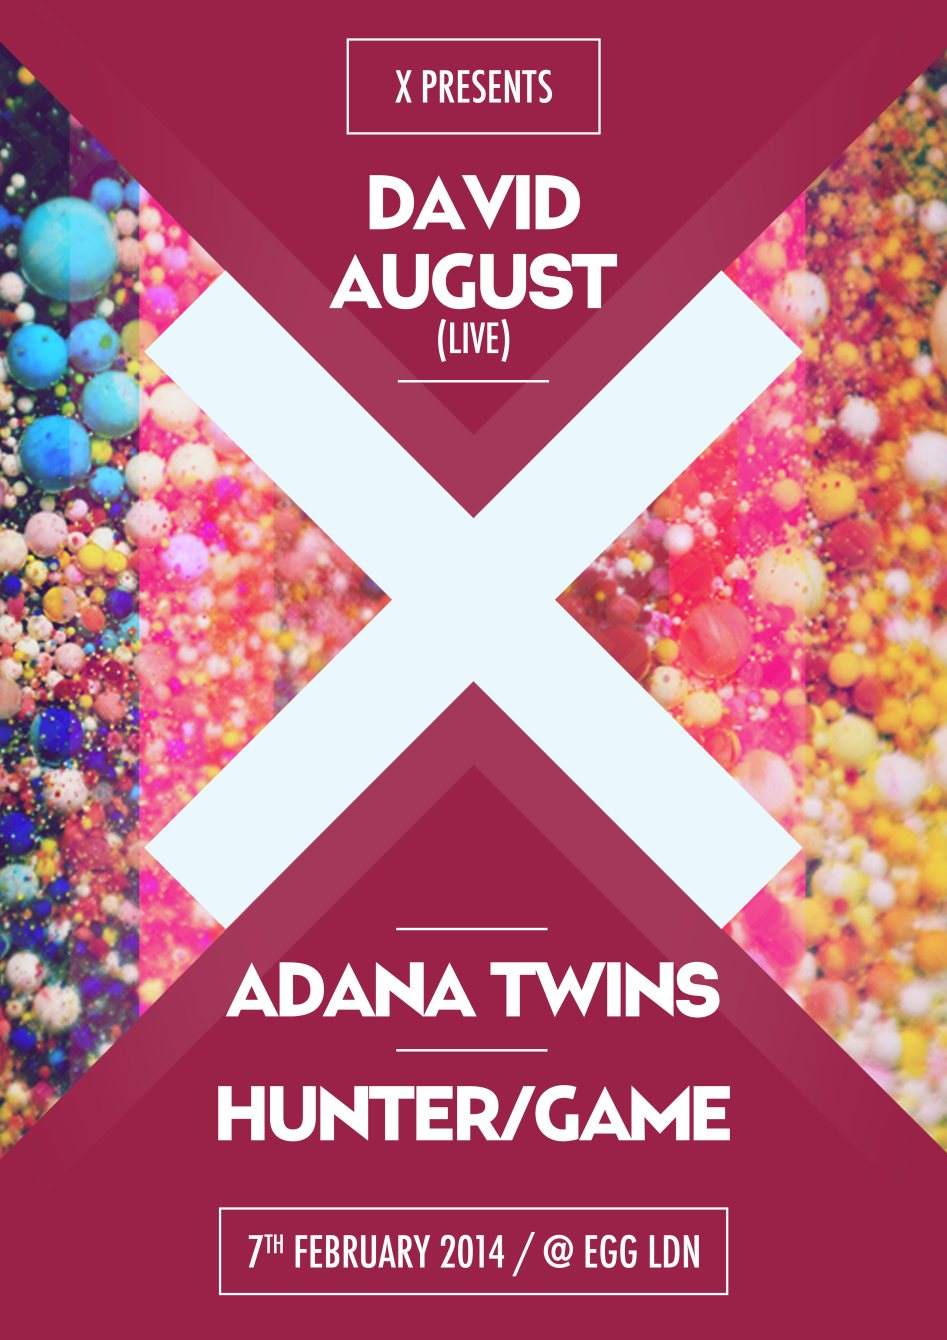 X presents: David August (Live), Adana Twins, Hunter/Game - フライヤー表